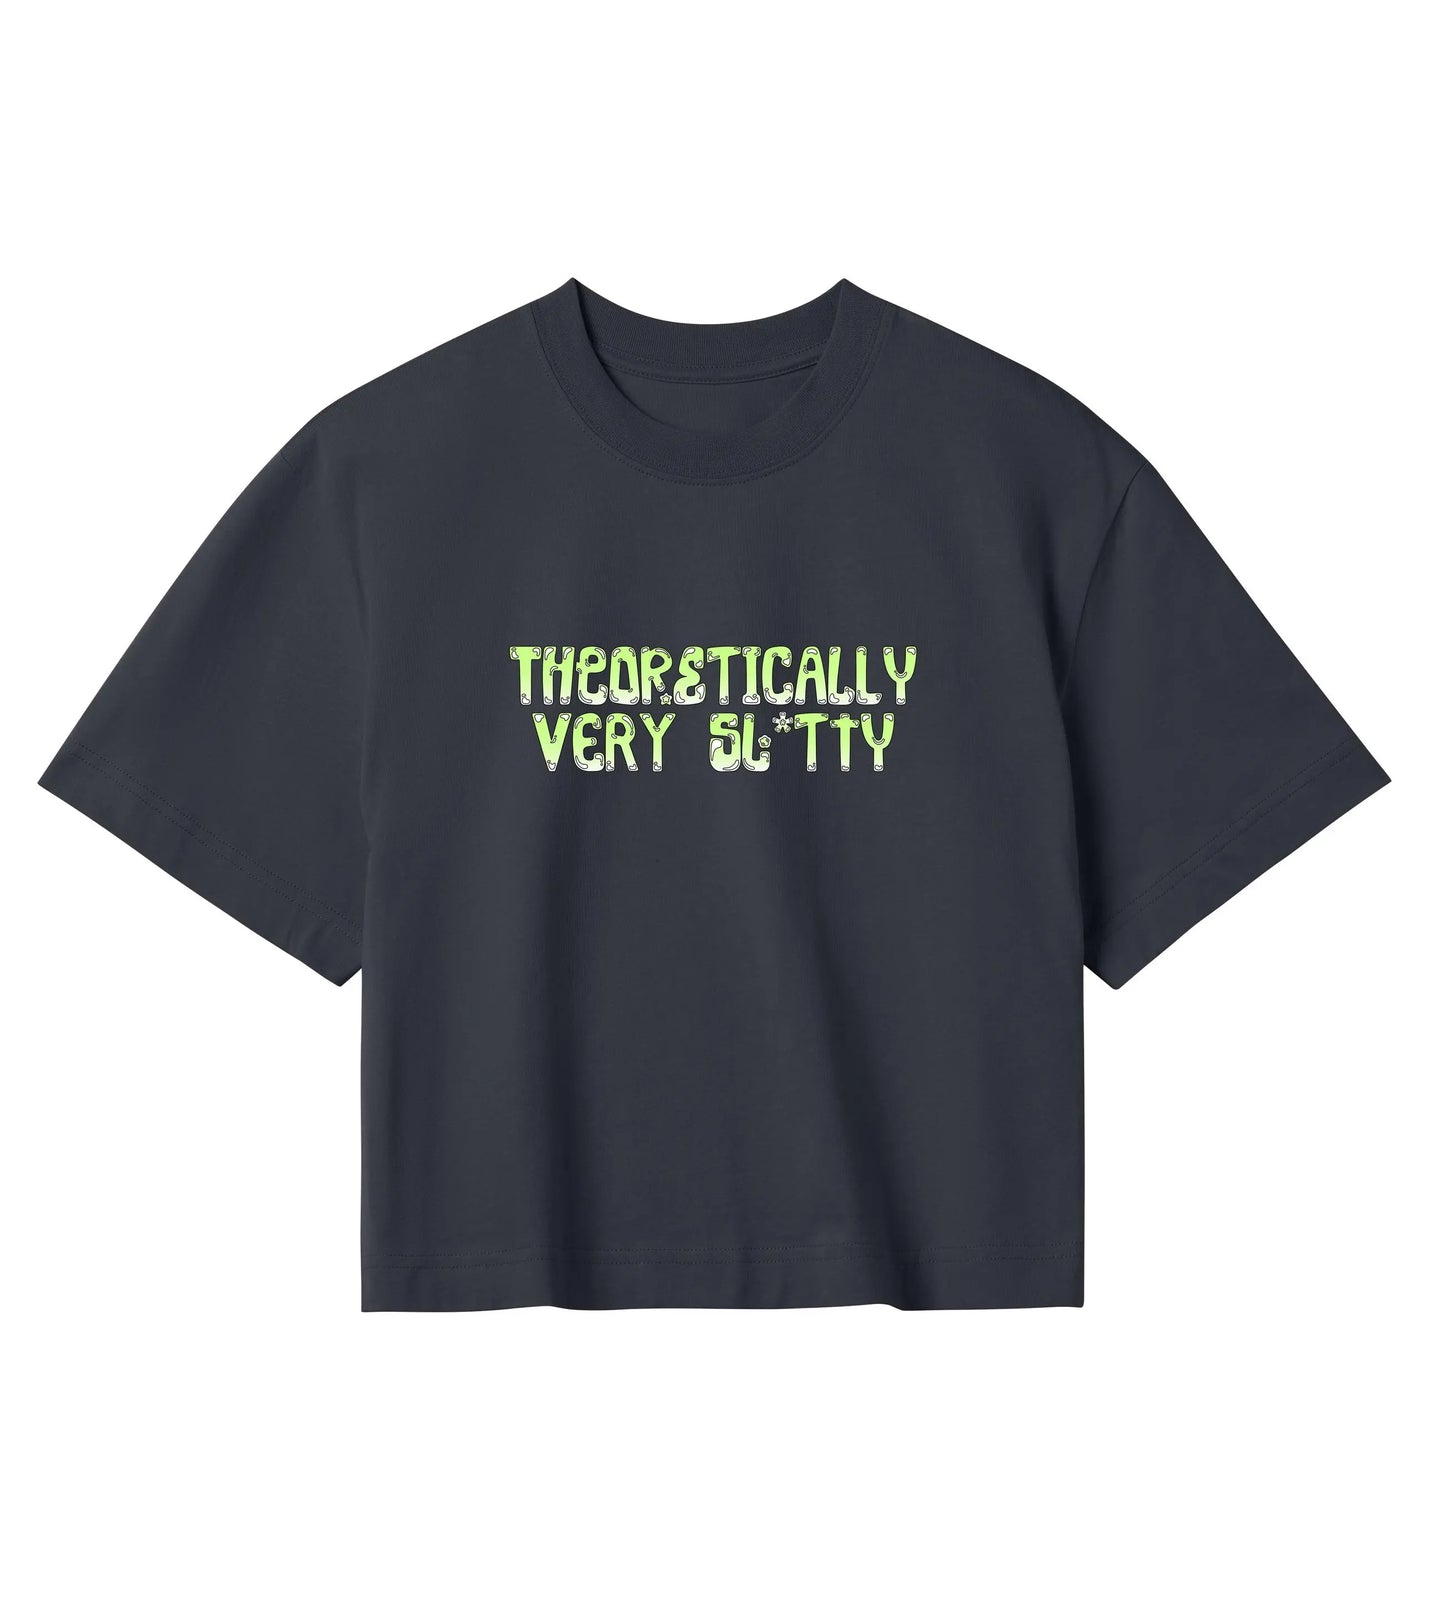 theoretically very sl*tty - Crop Top Pride Shirt